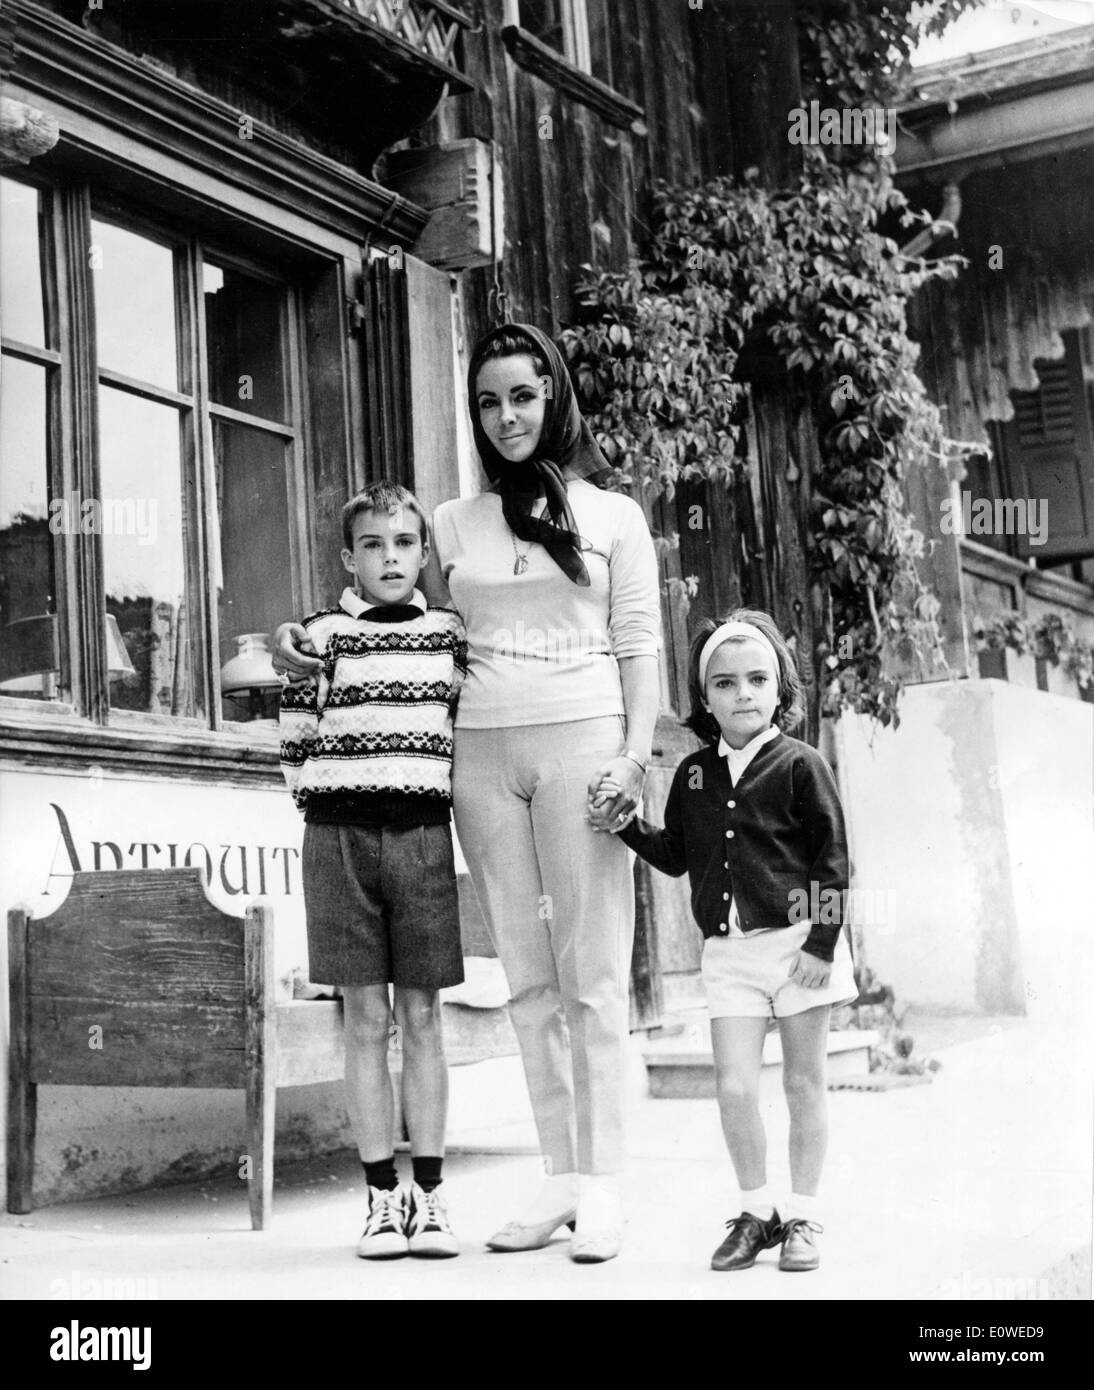 Elizabeth Taylor with her children on vacation in Switzerland Stock Photo